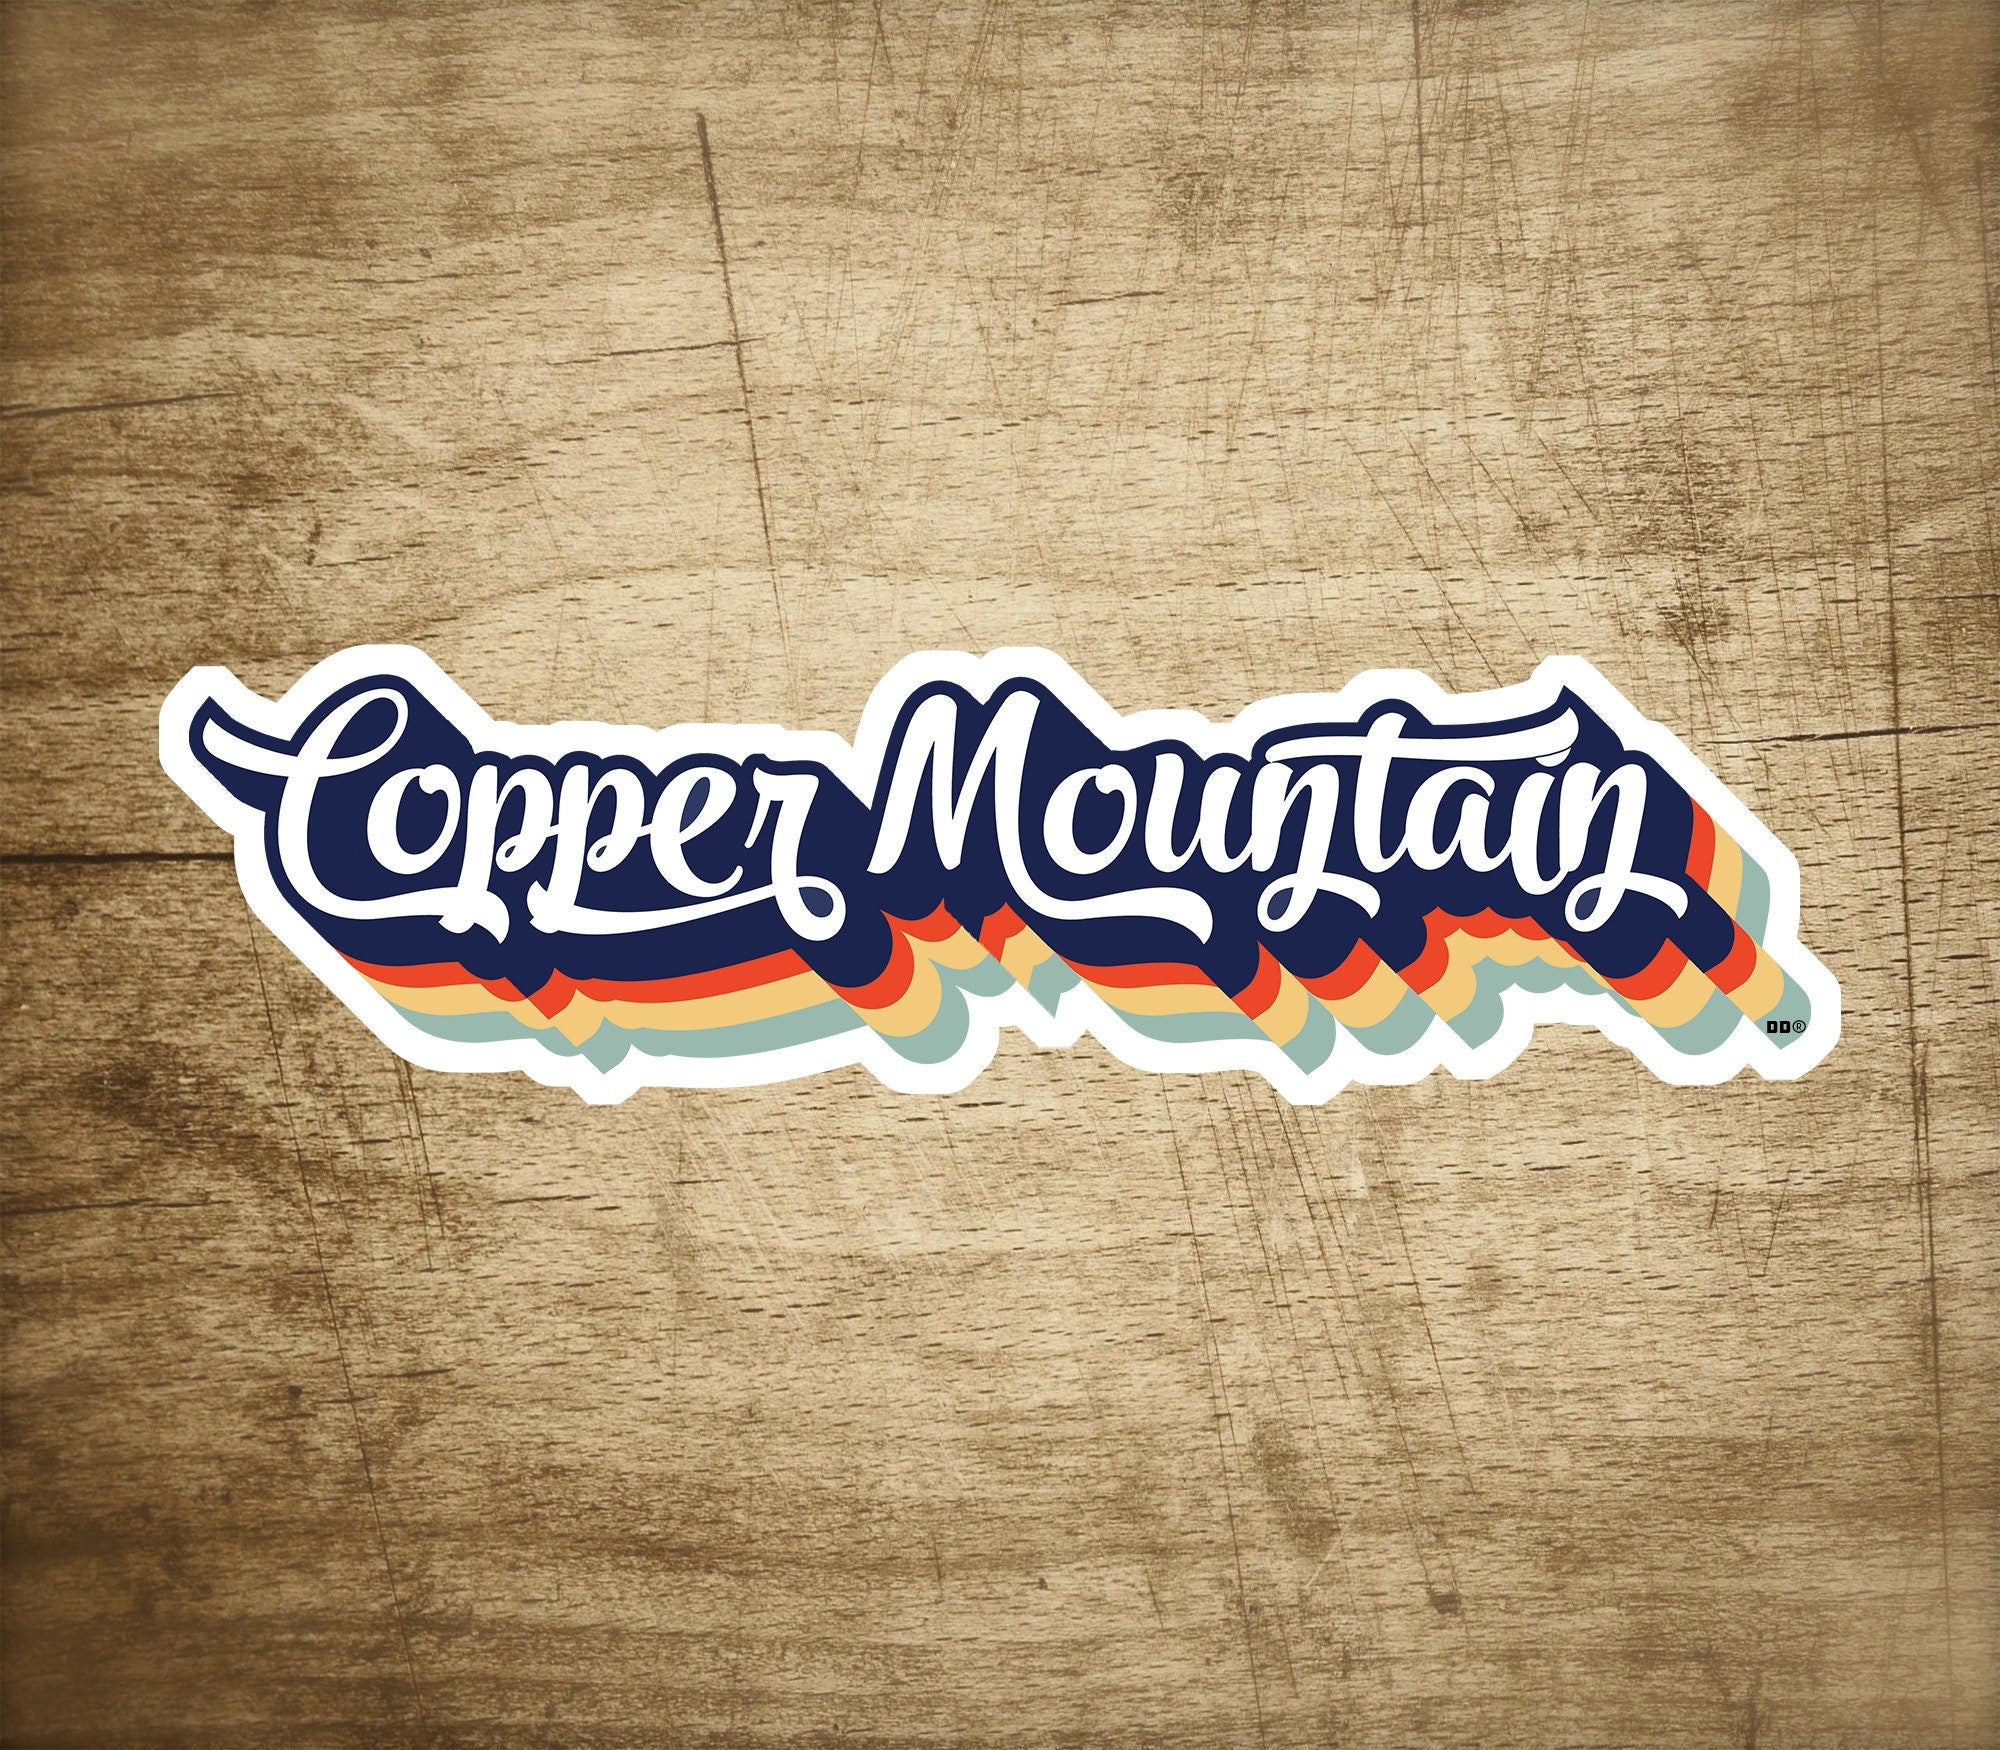 Ski Copper Mountain Colorado Skiing Decal Sticker 3.75" x 1.15" Vinyl Laptop Bumper Luggage